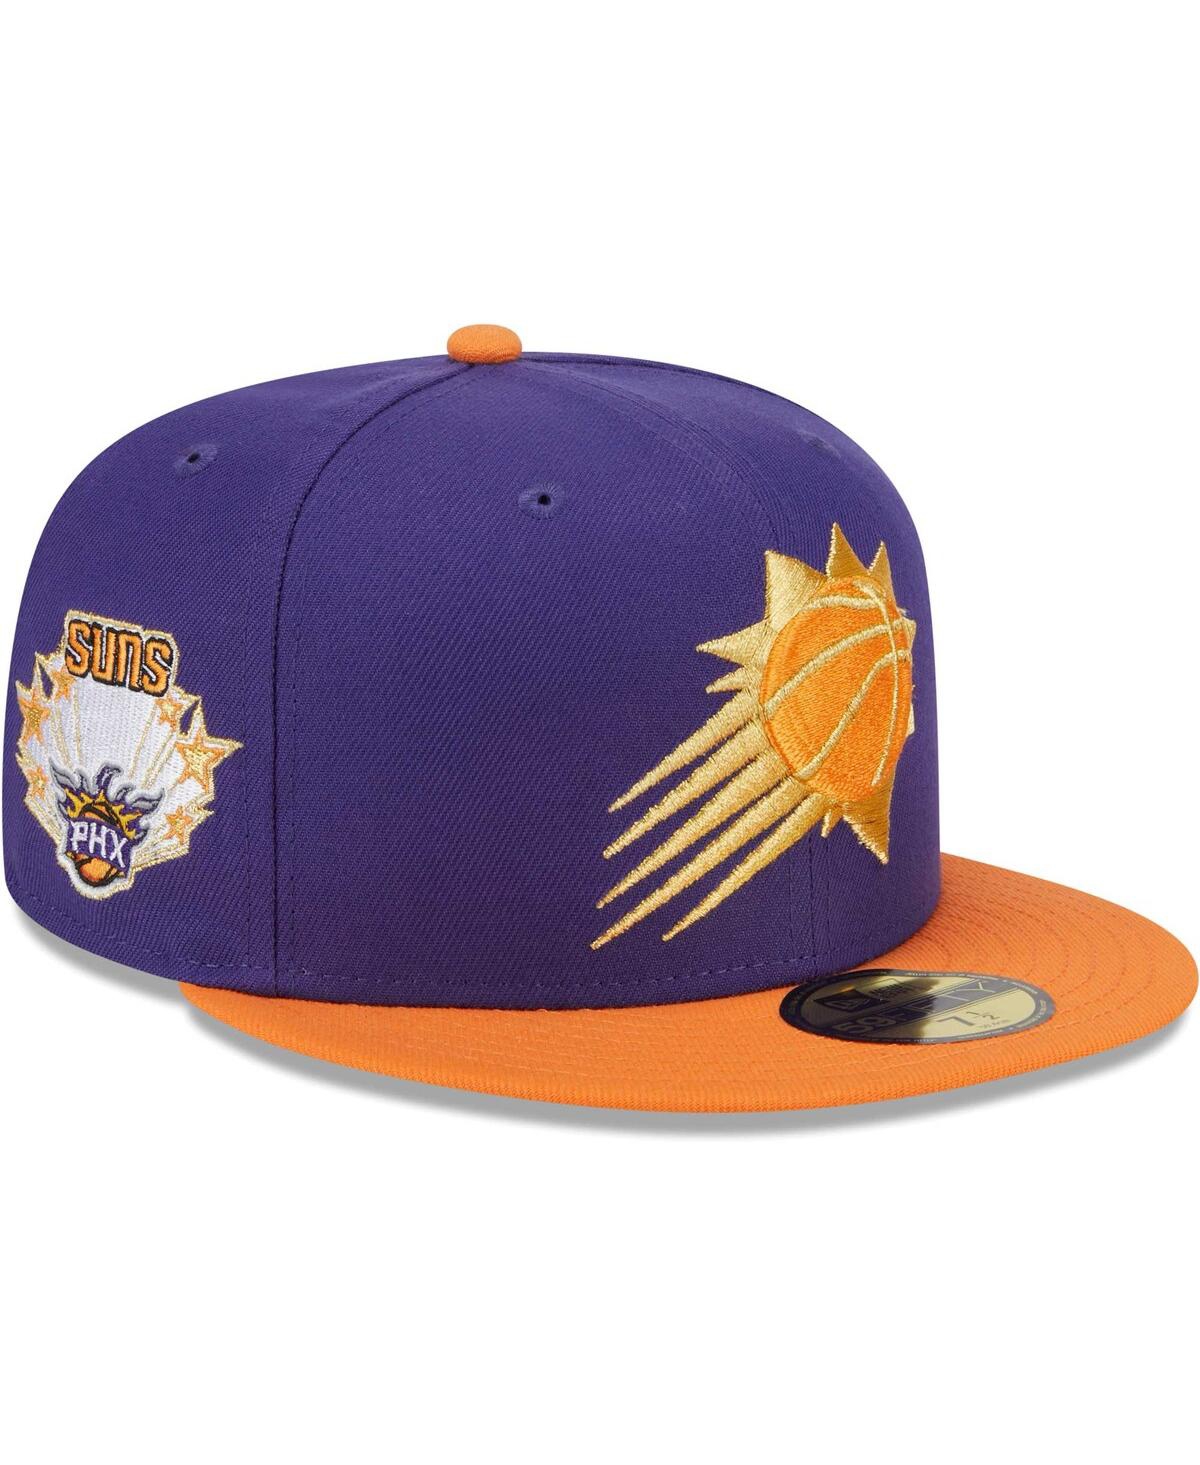 Men's New Era Purple, Orange Phoenix Suns Gameday Gold Pop Stars 59FIFTY Fitted Hat - Purple, Orange